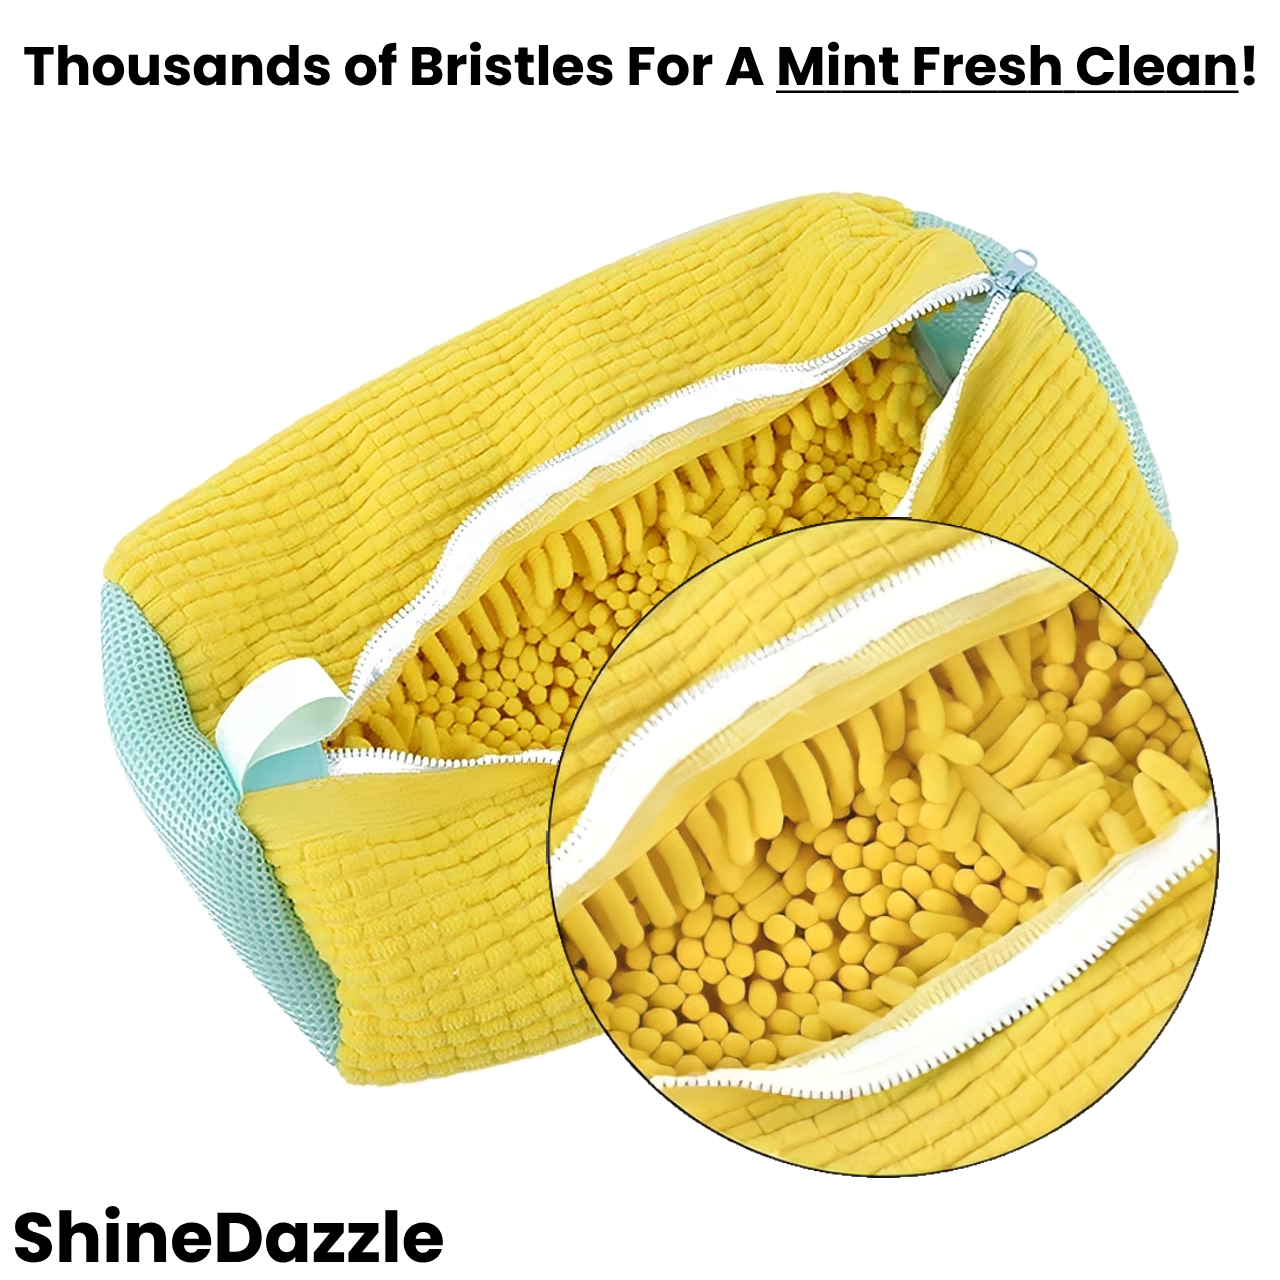 Dazzling Bristle Shoe Bag™